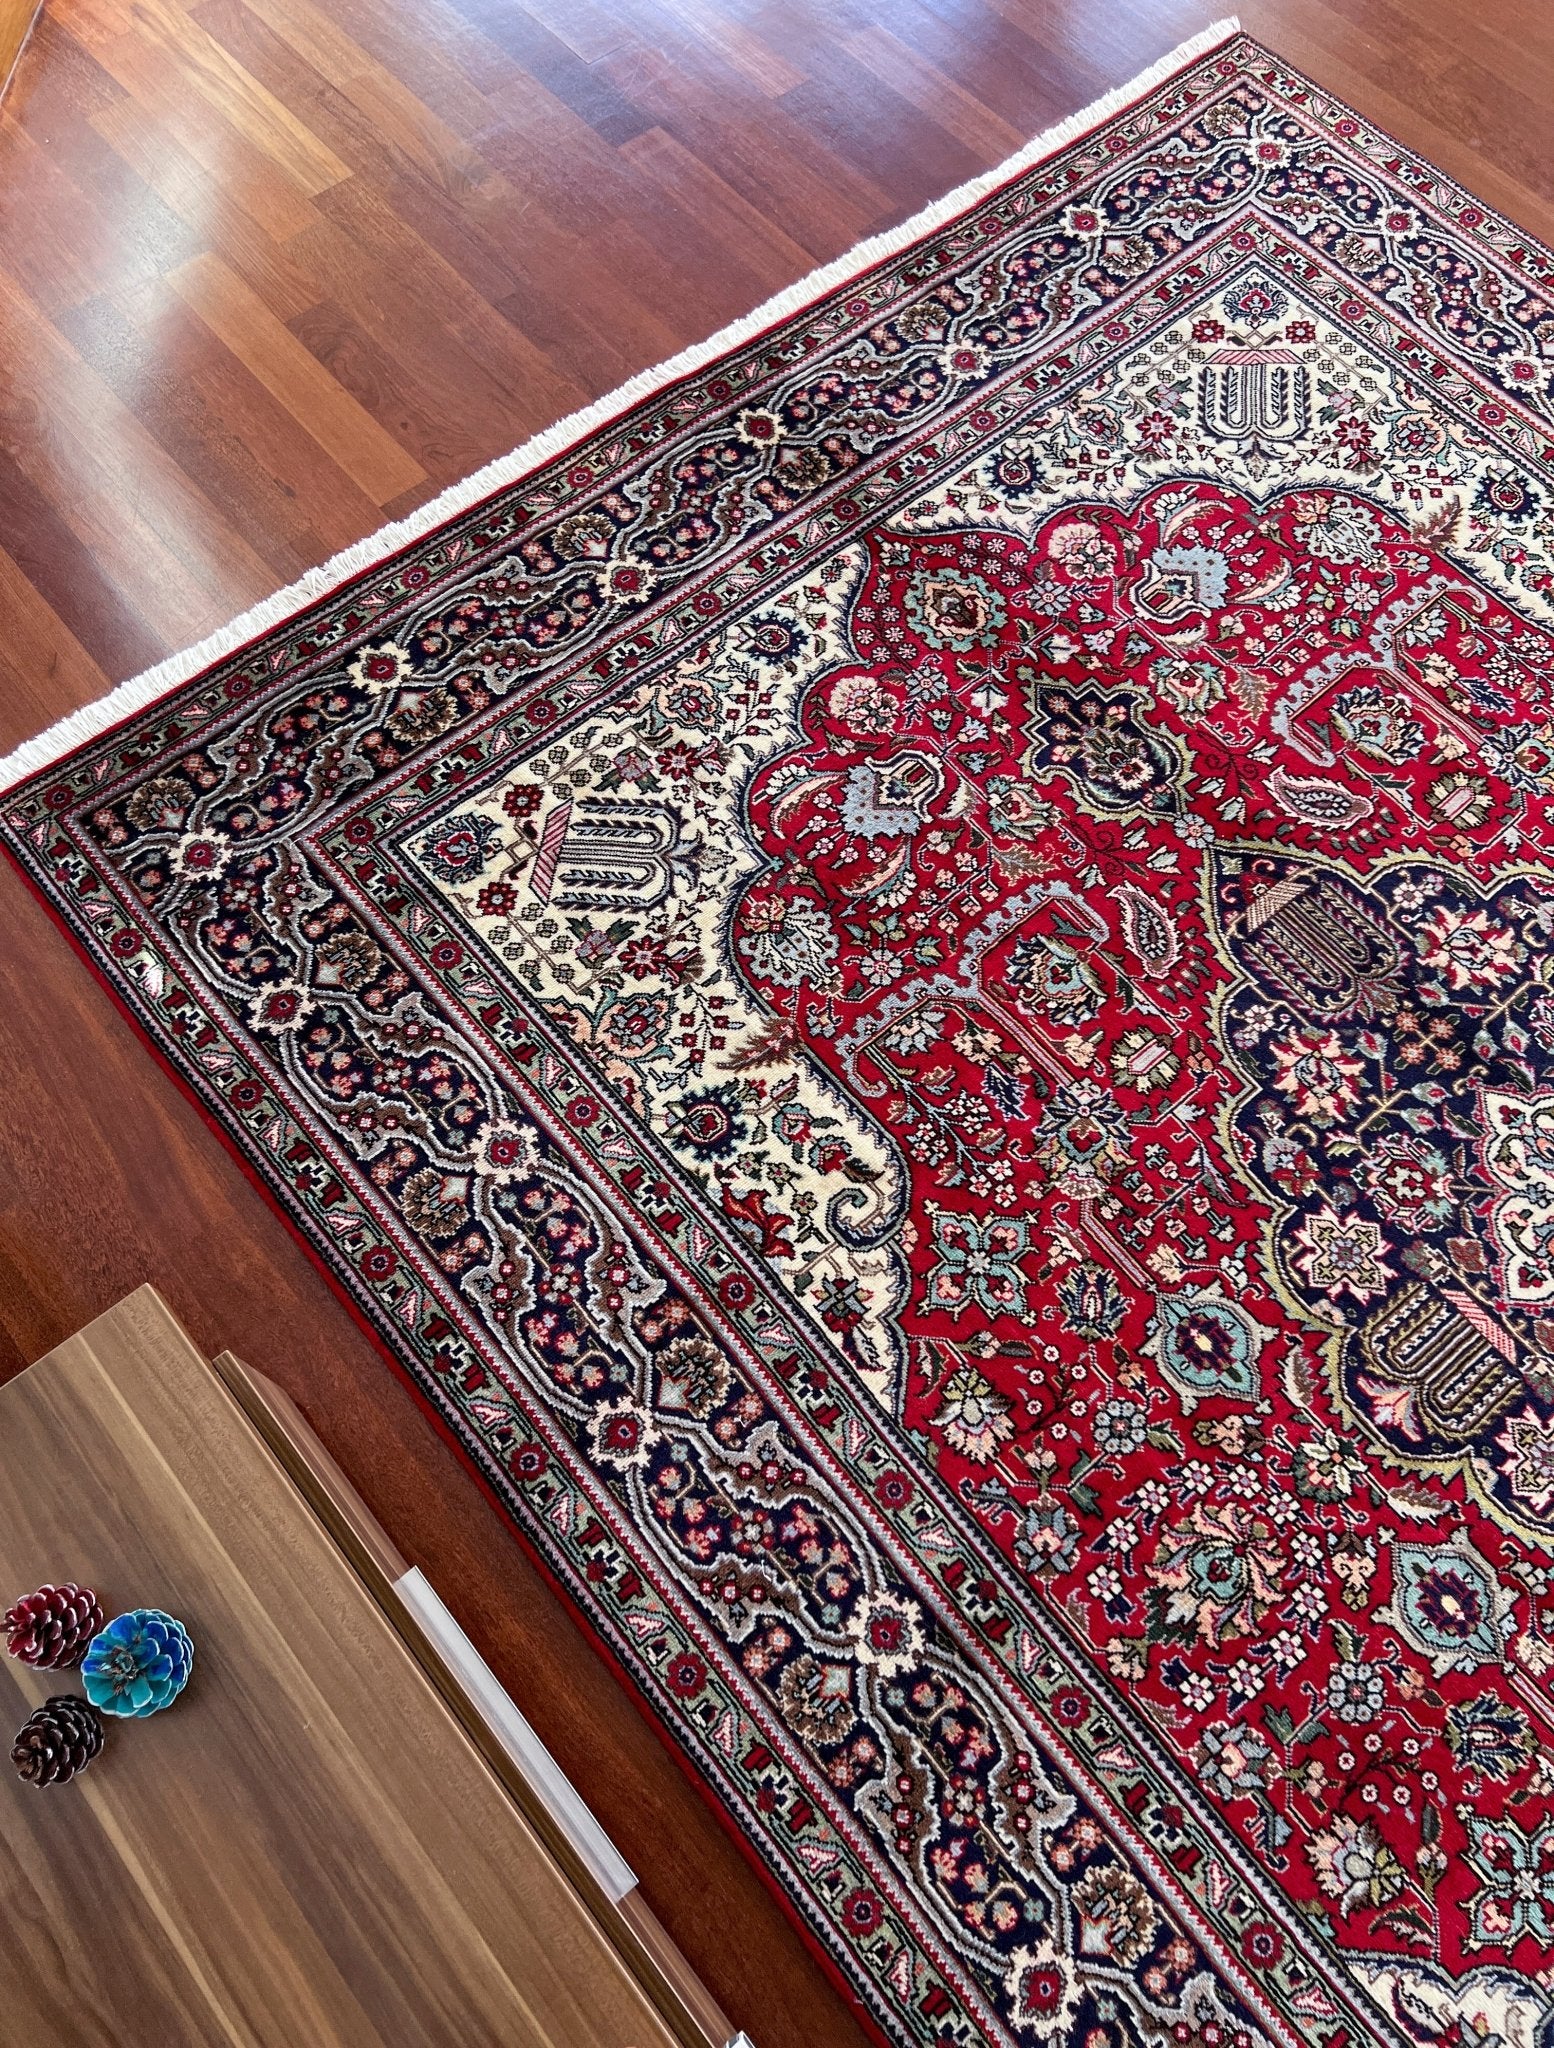 Tebriz large handmade wool persian area rug. Oriental rug shop san francisco bay area.